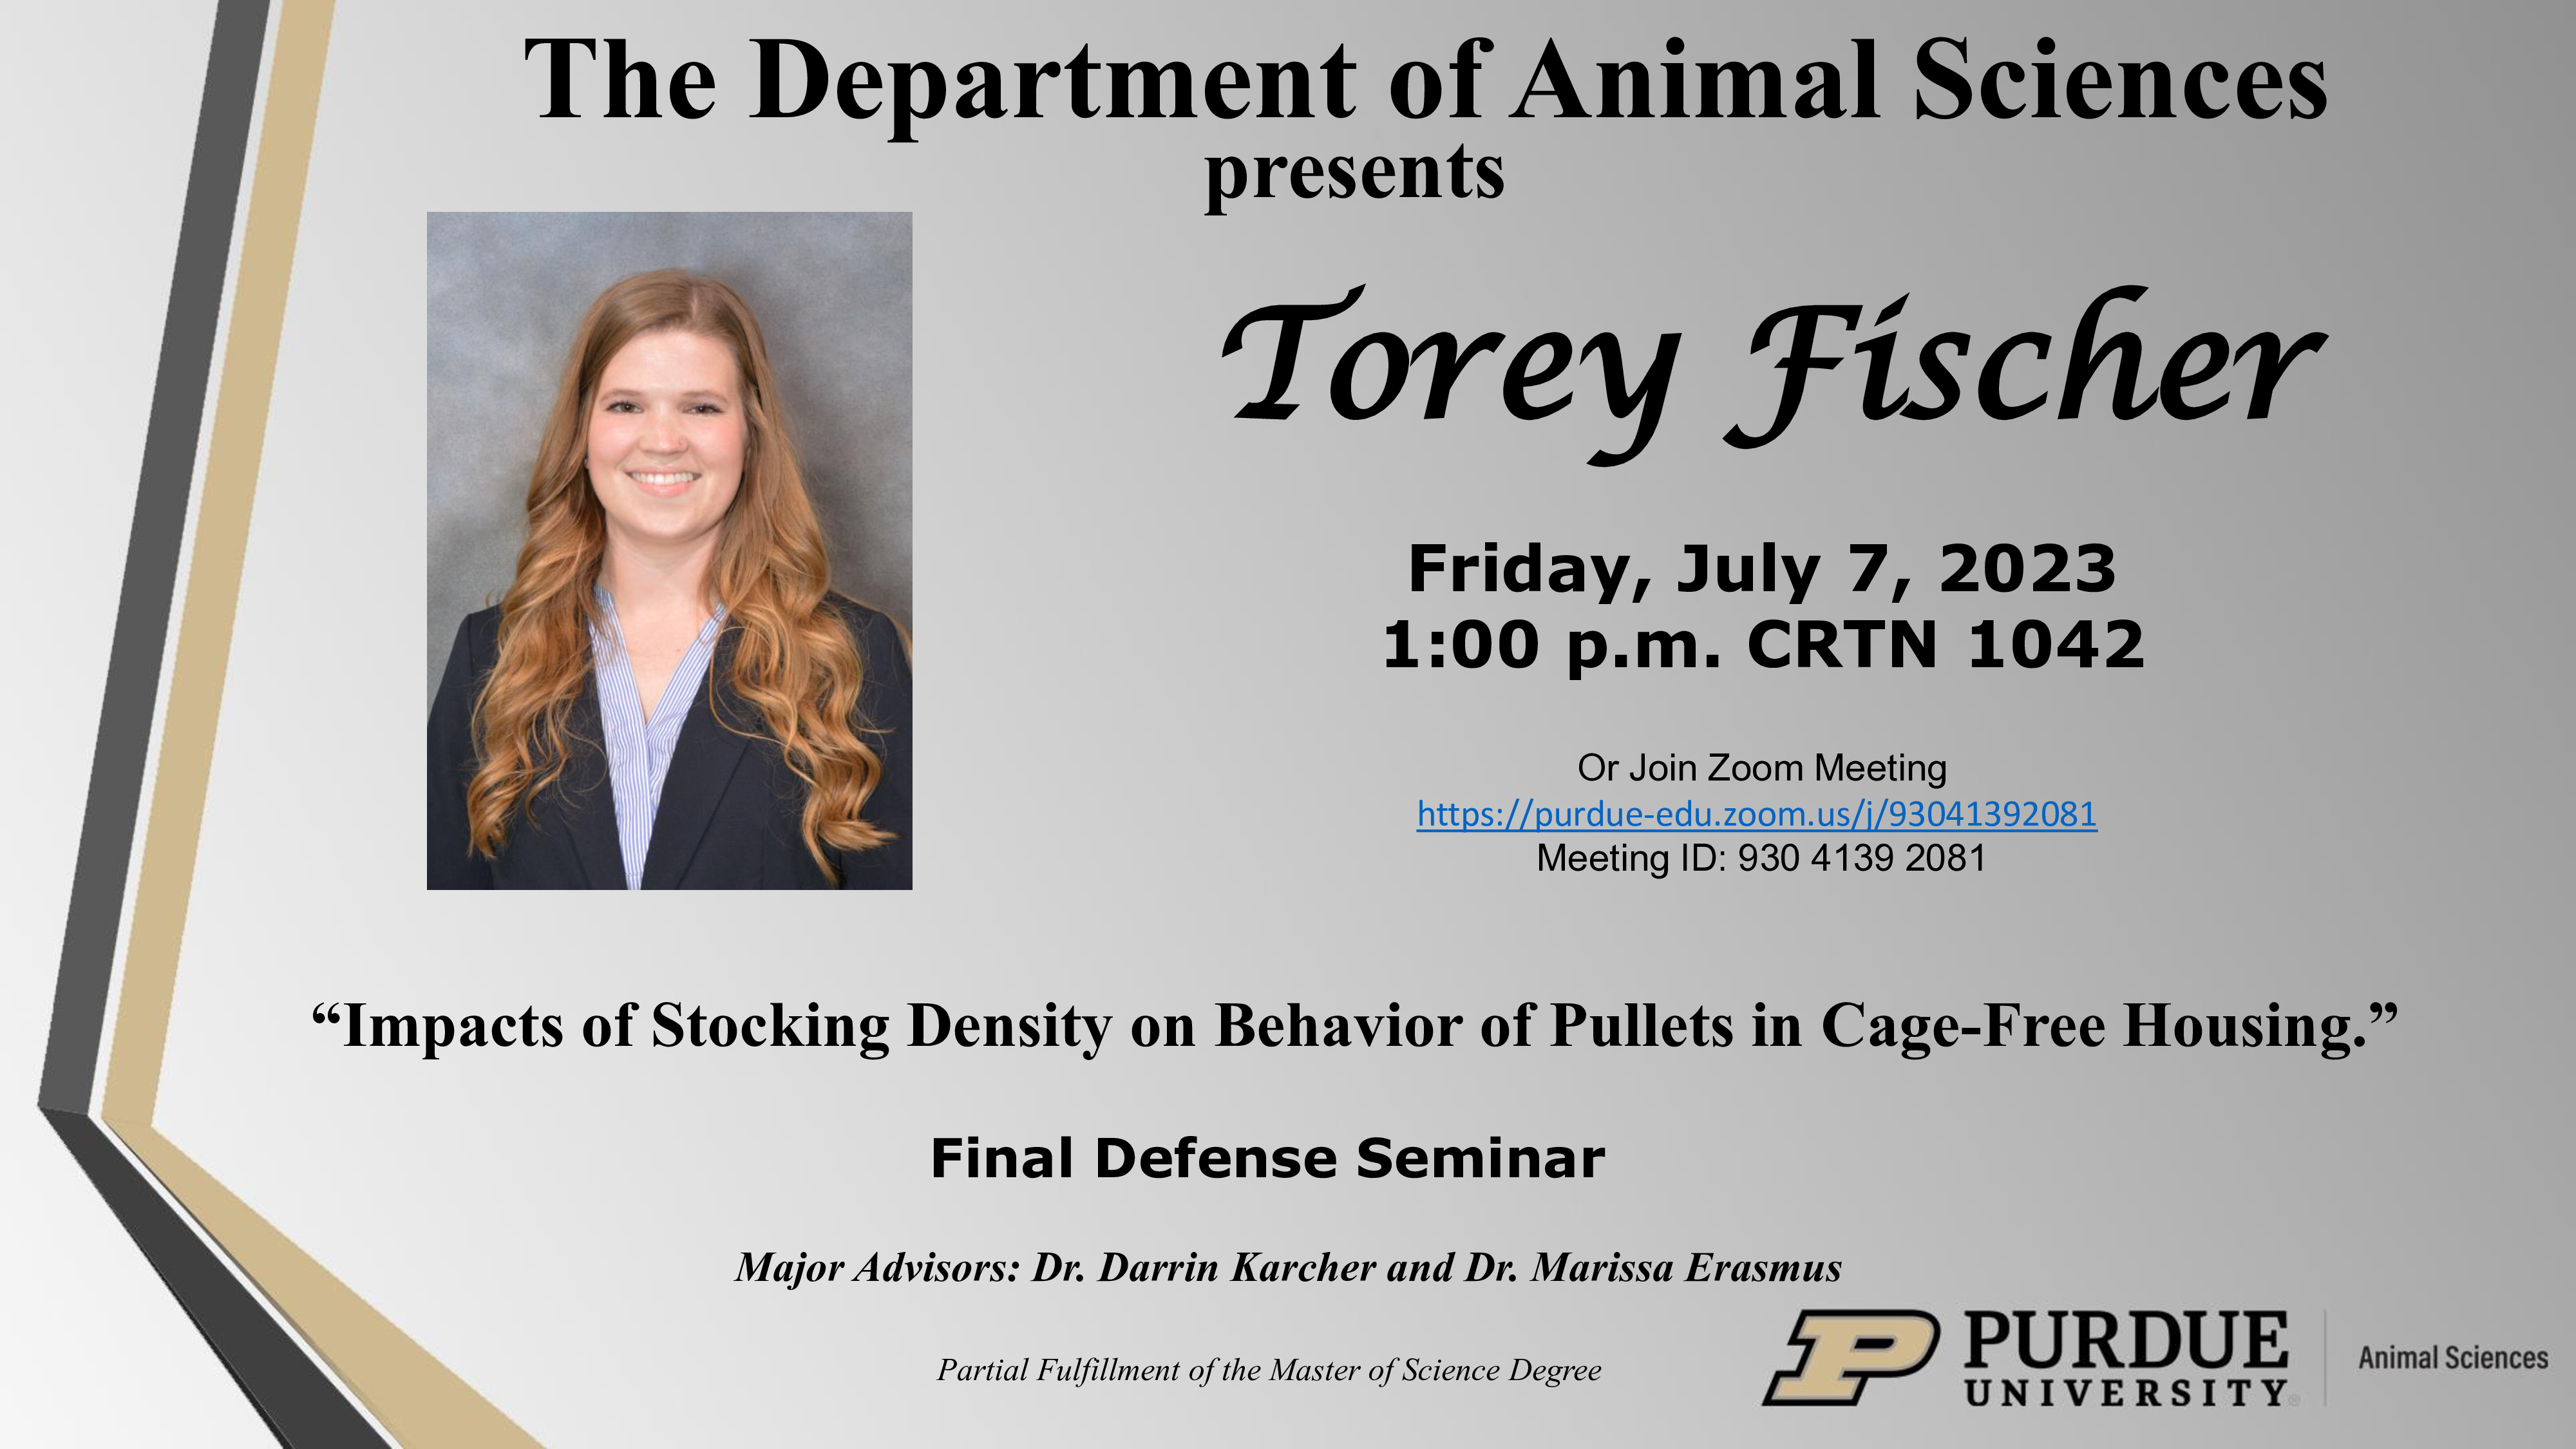 Torey-Fischer-Final-Defense-Seminar-Flyer-16.9-Ratio.jpg